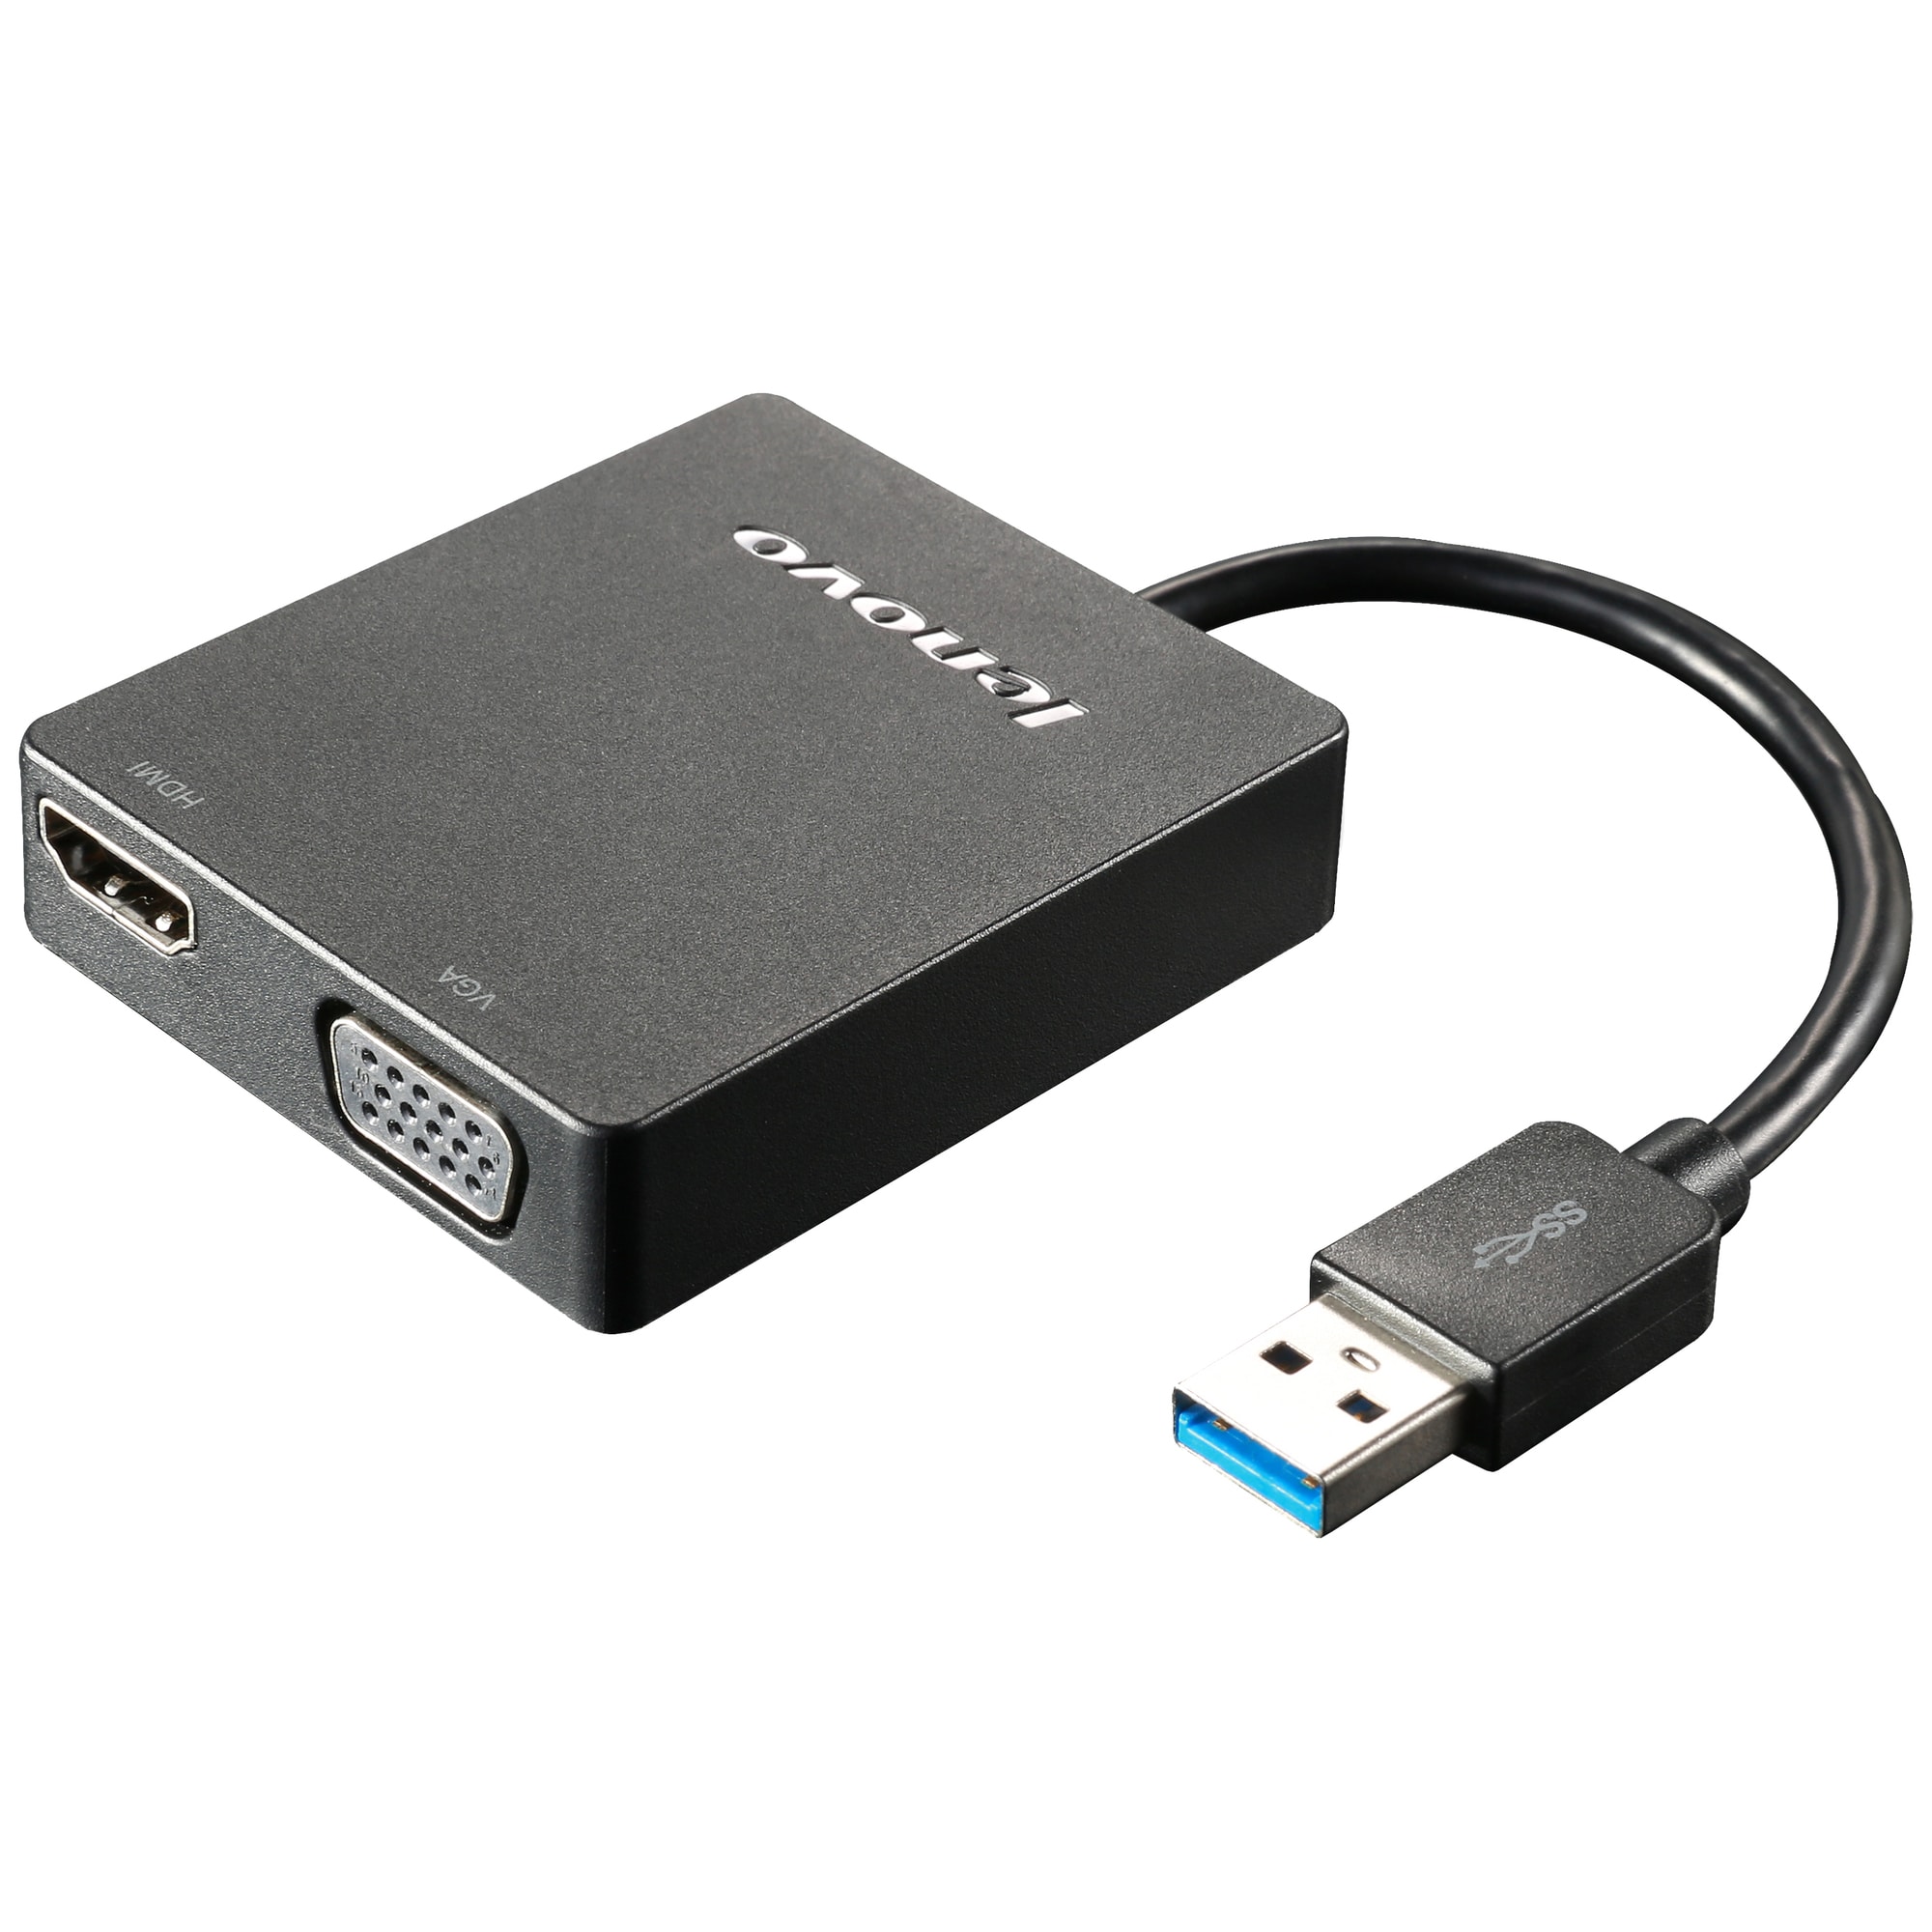 solidaritet klasse Skygge Lenovo universal USB 3.0 til VGA og HDMI adapter | Elgiganten